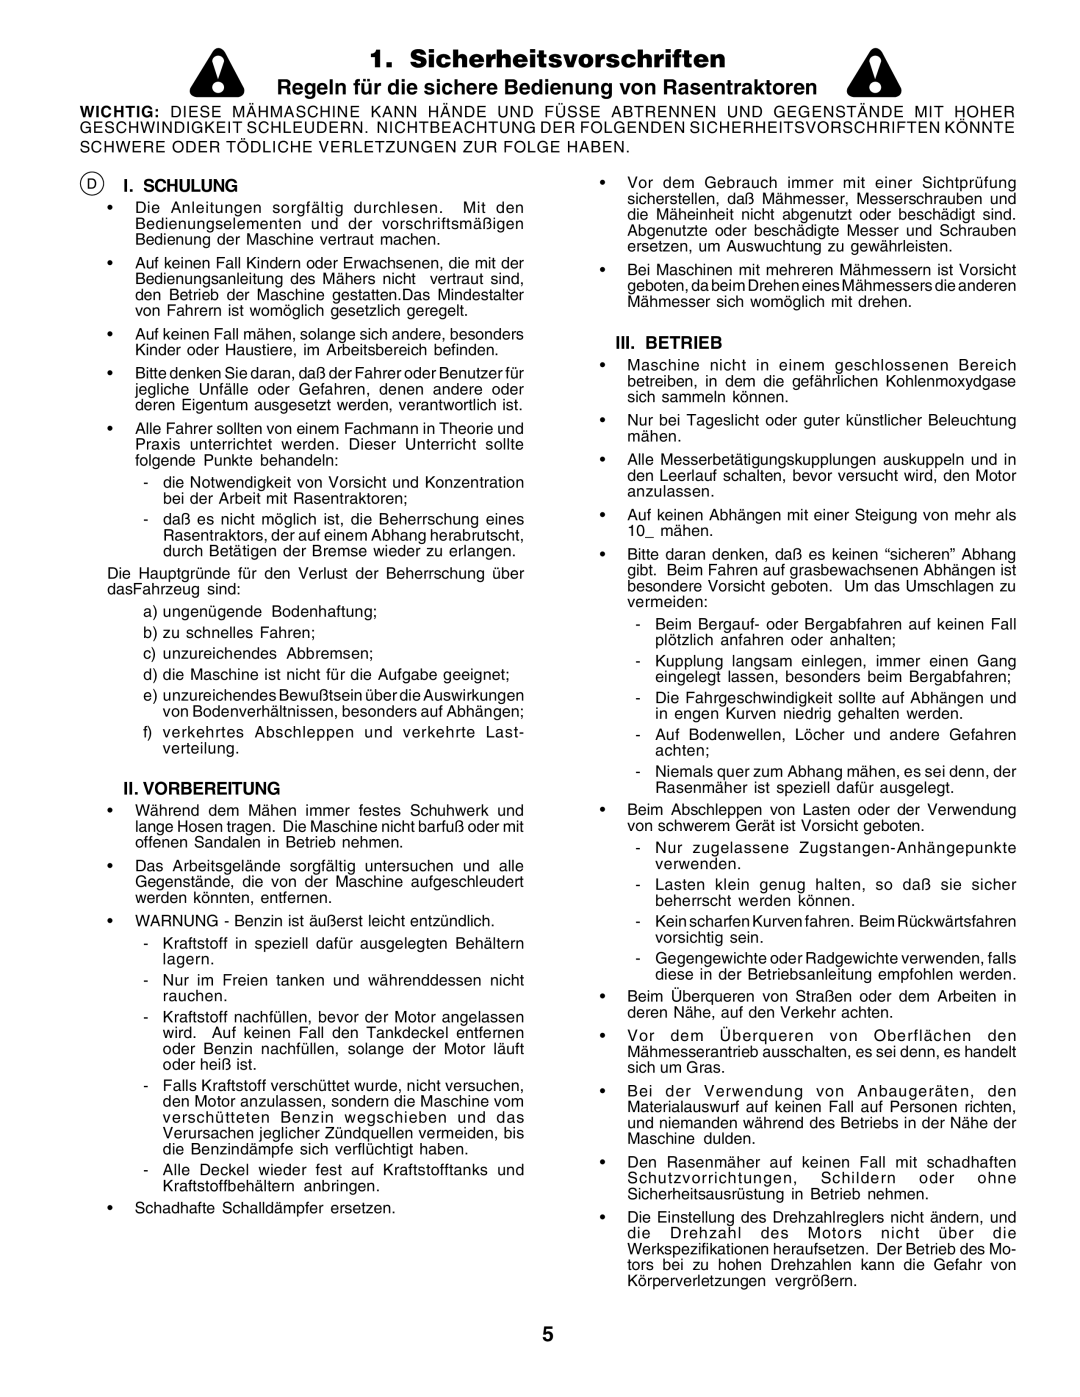 Husqvarna CT135 instruction manual Sicherheitsvorschriften, I. Schulung, Ii.Vorbereitung, Iii.Betrieb 